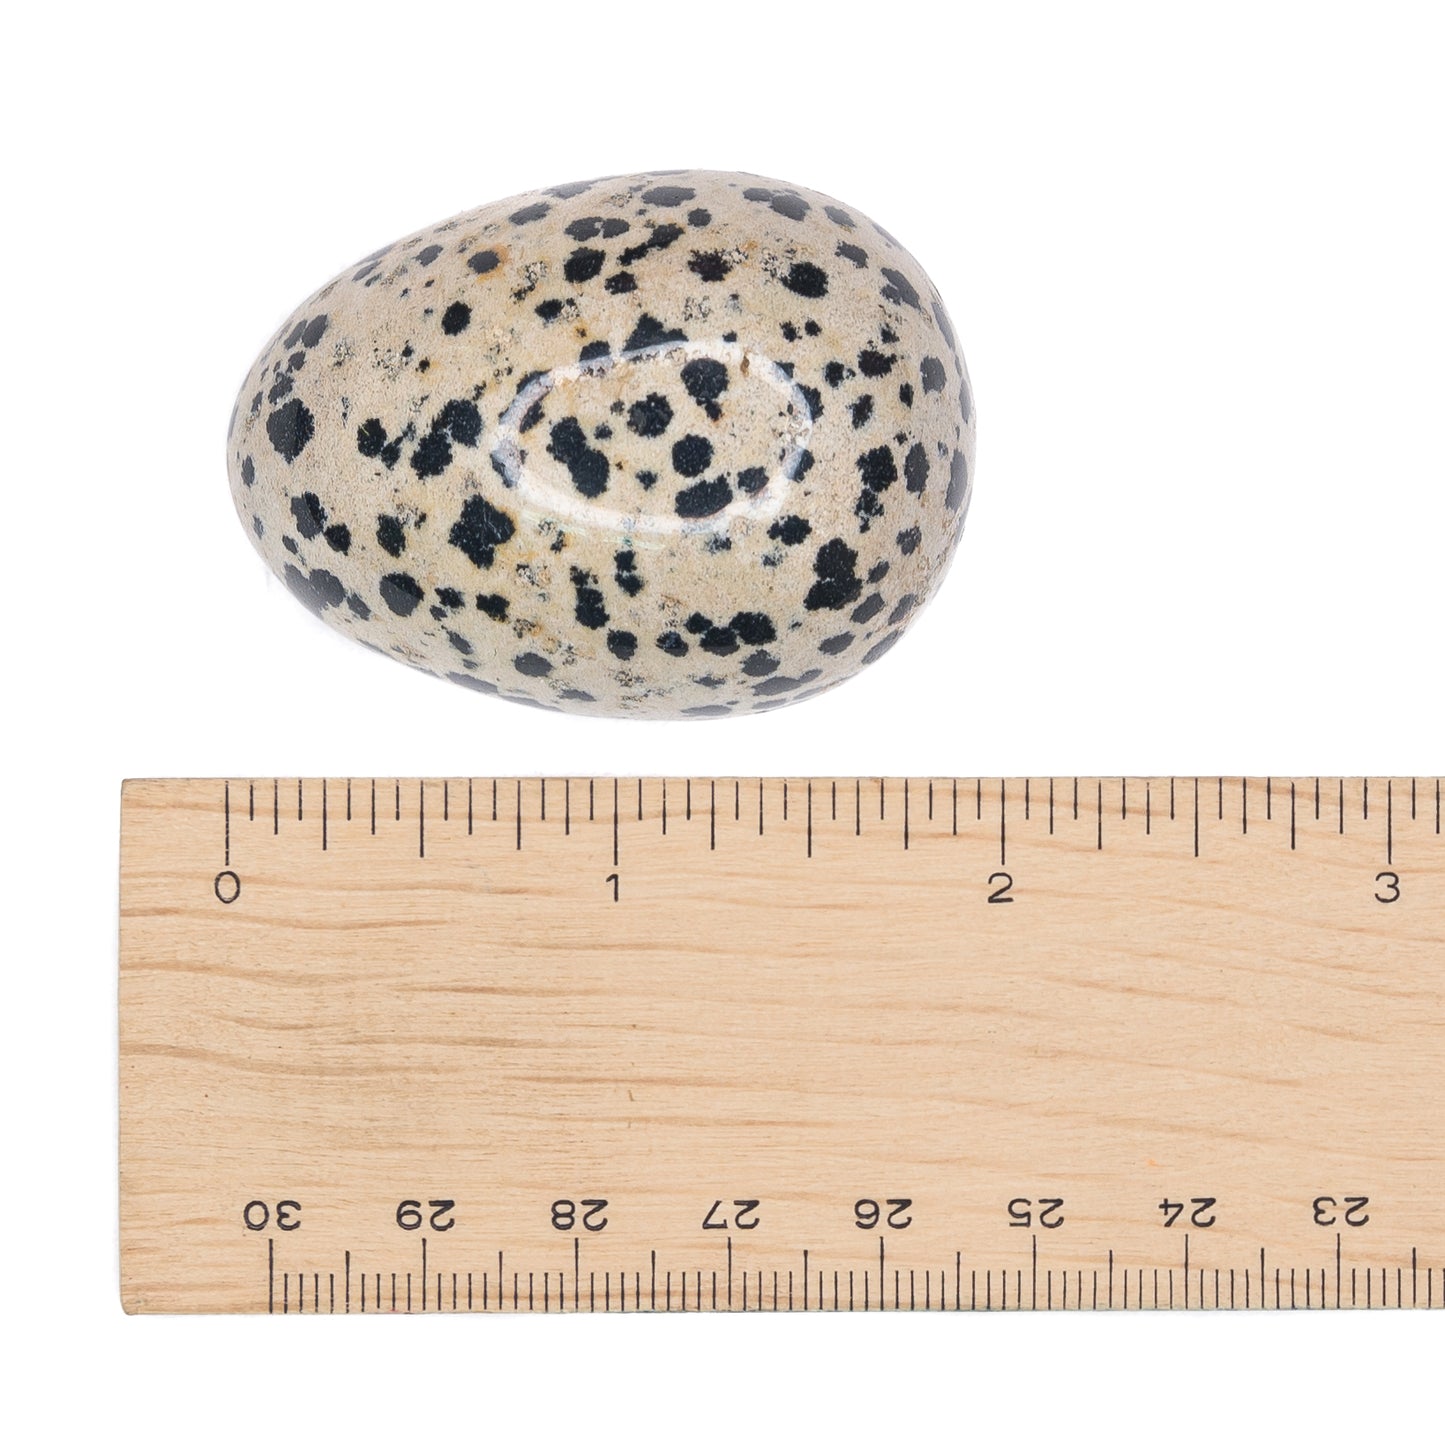 Jasper - Dalmatian Egg $60